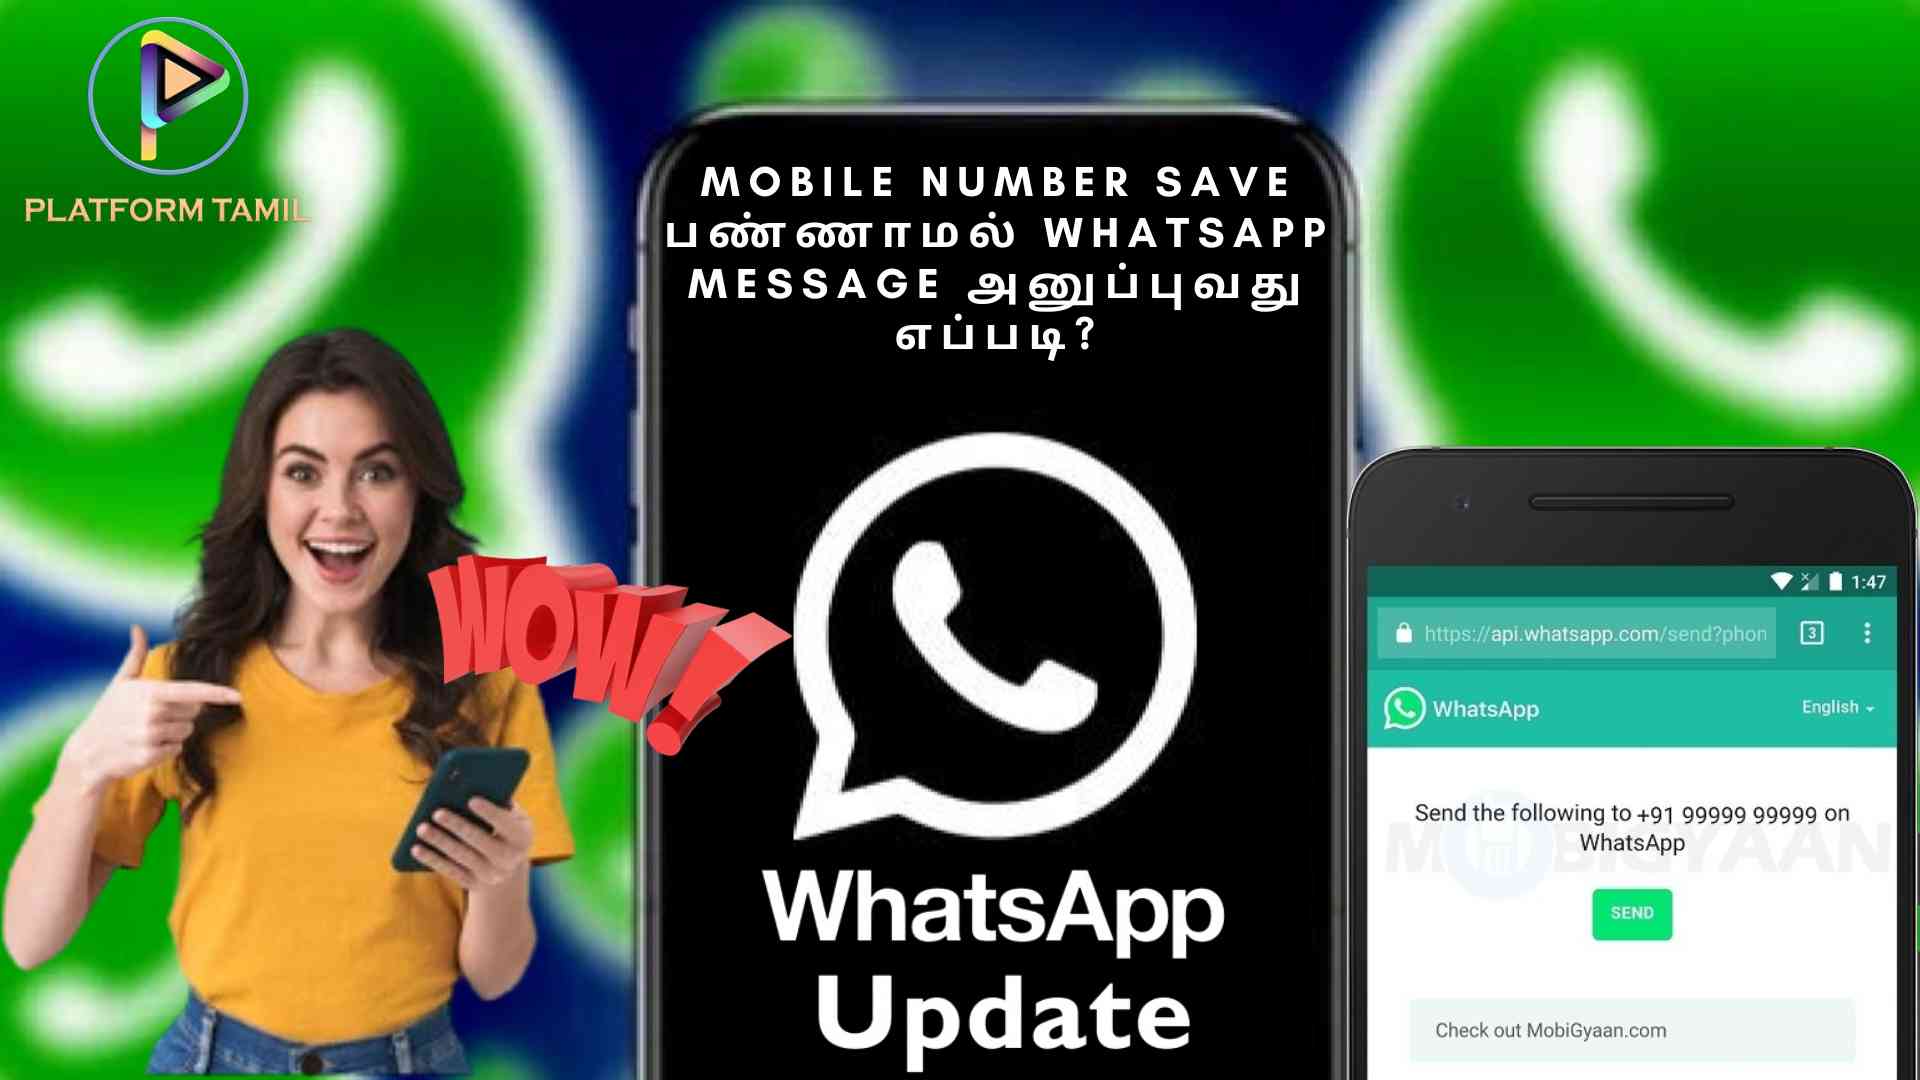 Save பண்ணாத தொலைபேசி எண்களில் Whatsapp Message அனுப்புவது எப்படி? - Platform Tamil